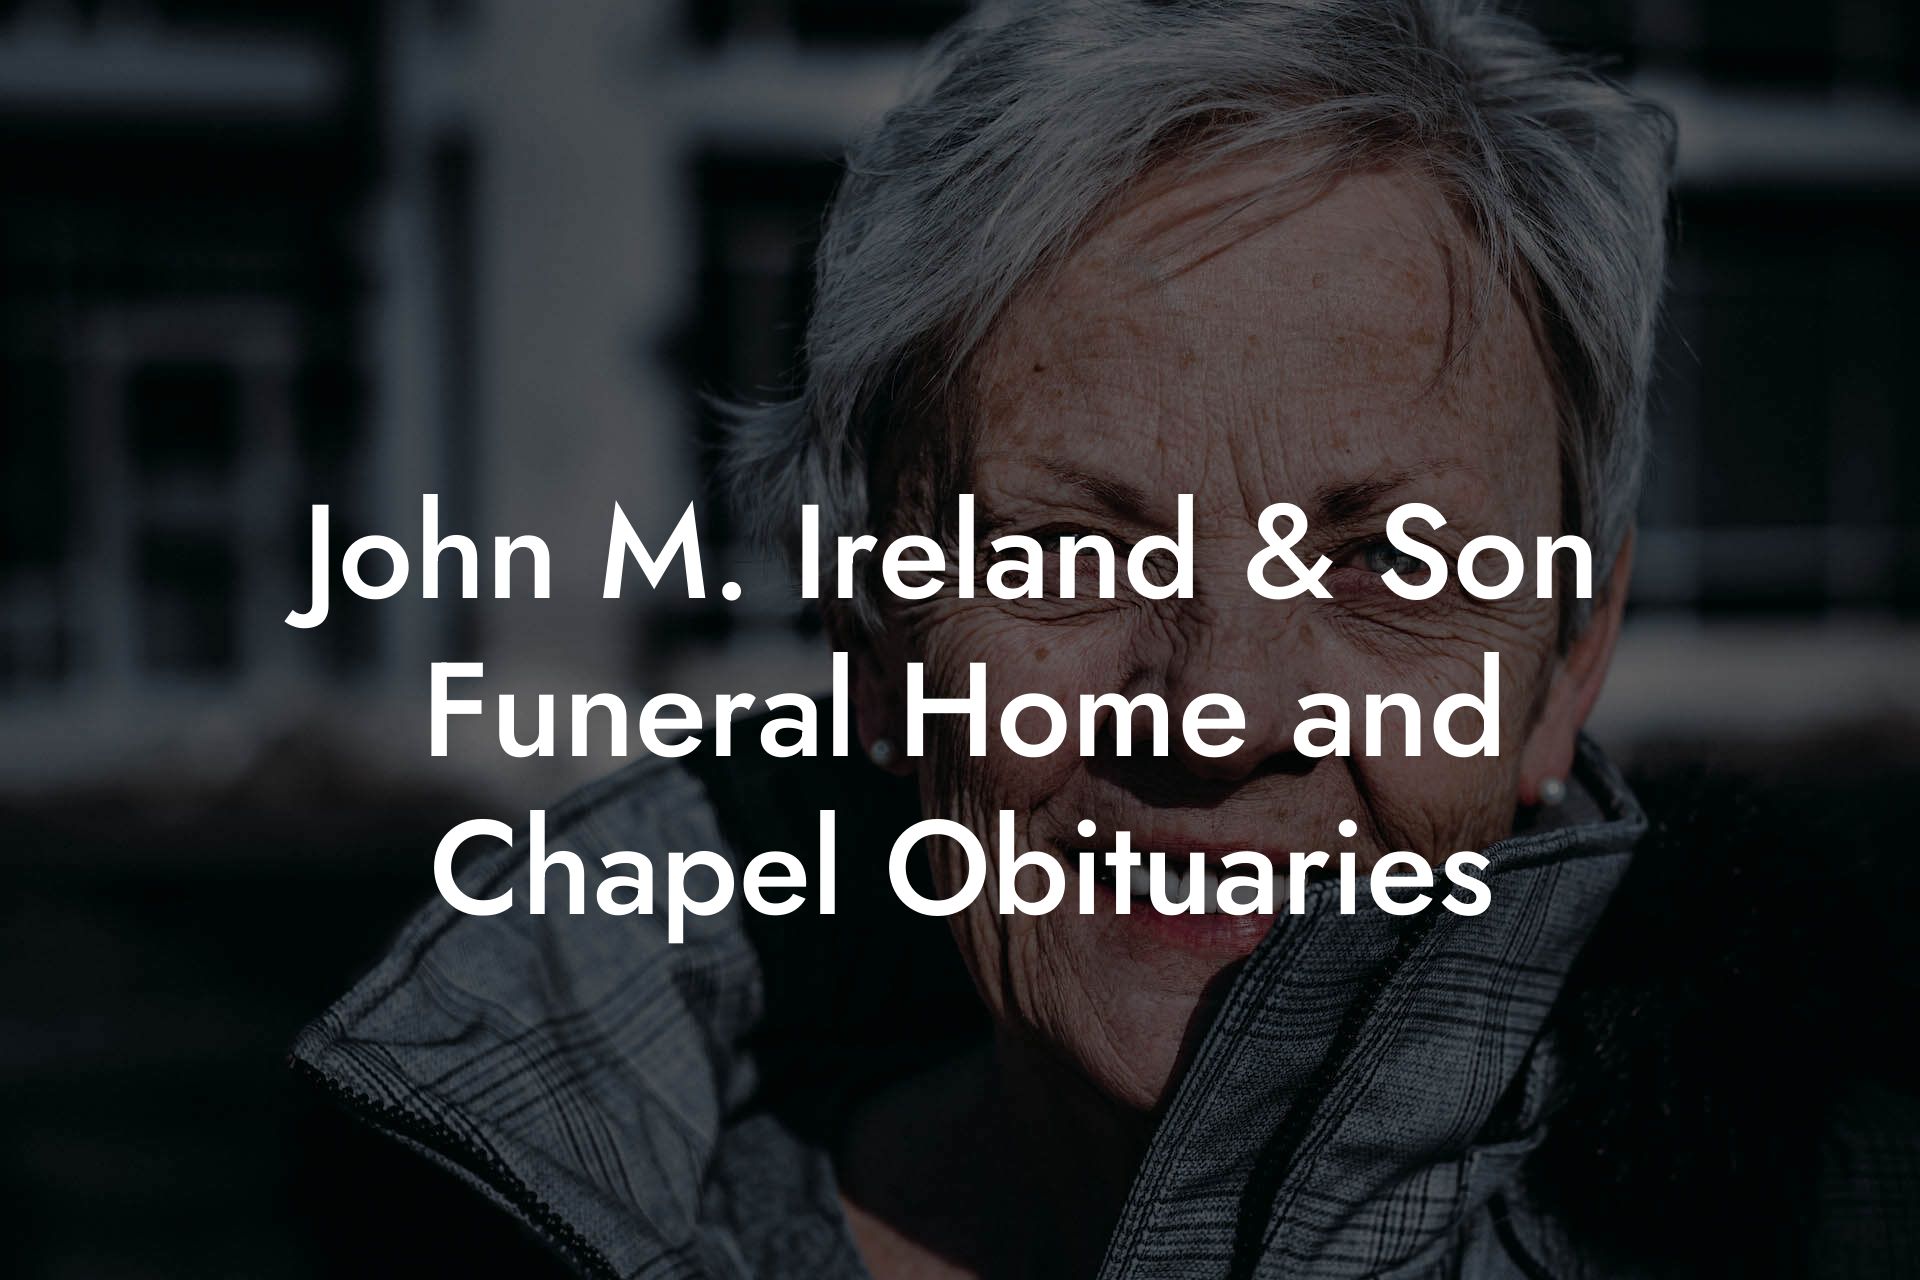 John M. Ireland & Son Funeral Home and Chapel Obituaries